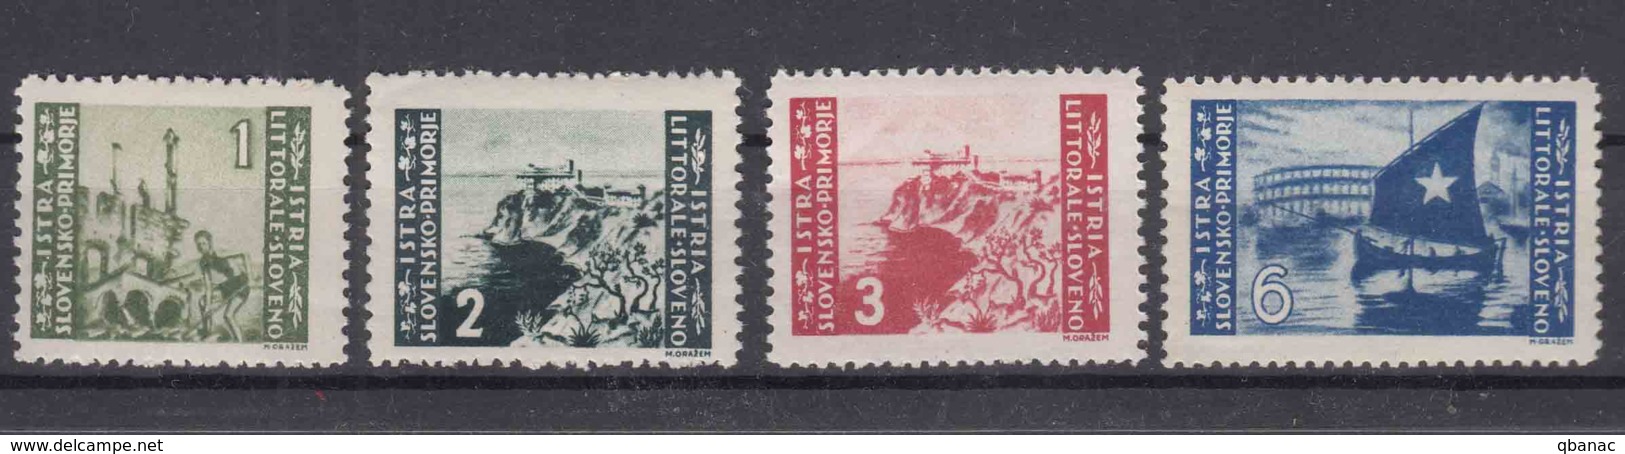 Istria Litorale Yugoslavia Occupation, 1946 Sassone#63-66 Complete Set, Mint Never Hinged - Jugoslawische Bes.: Istrien